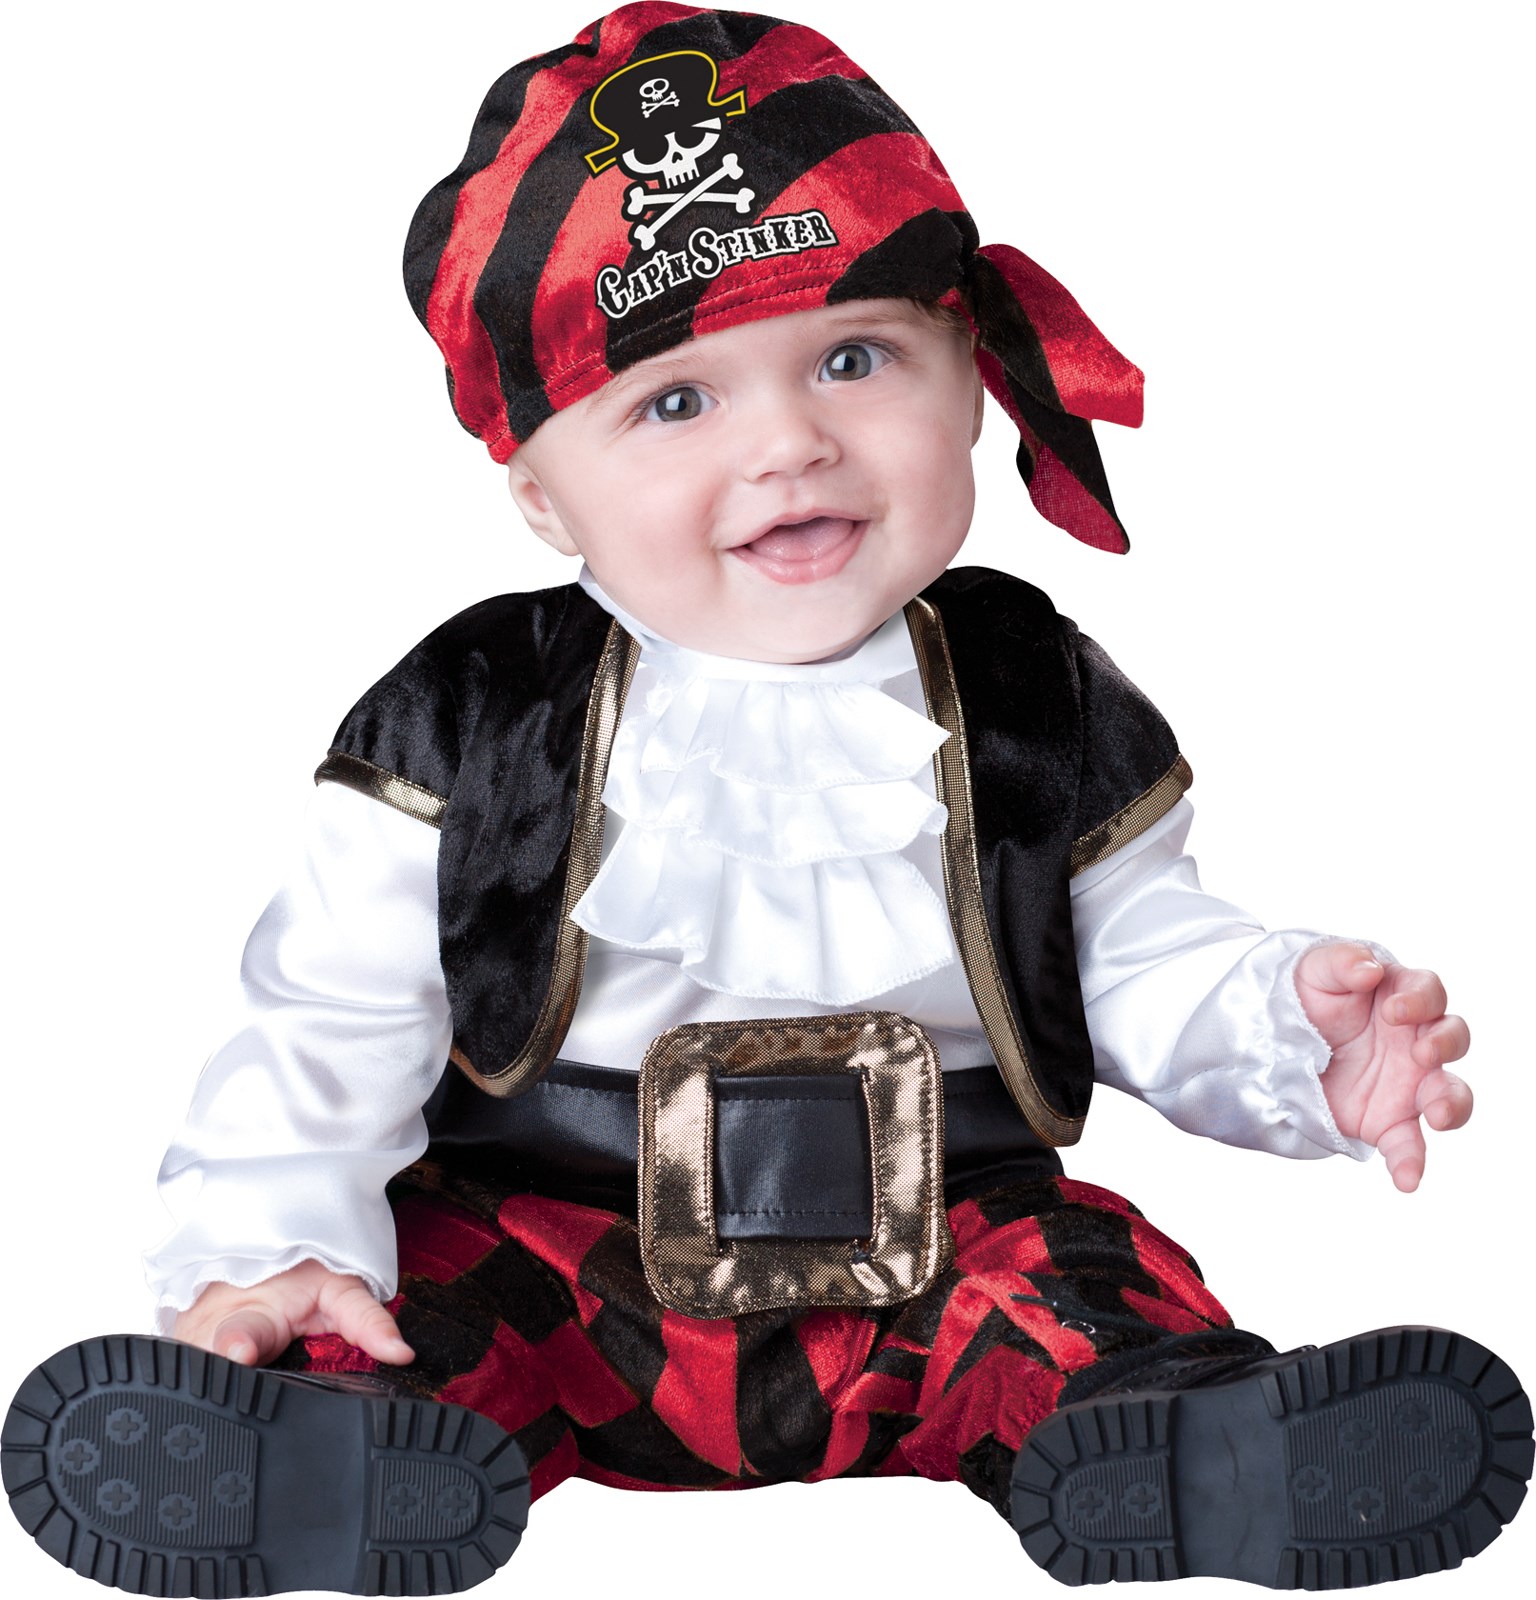 Capn Stinker Pirate Infant / Toddler Costume